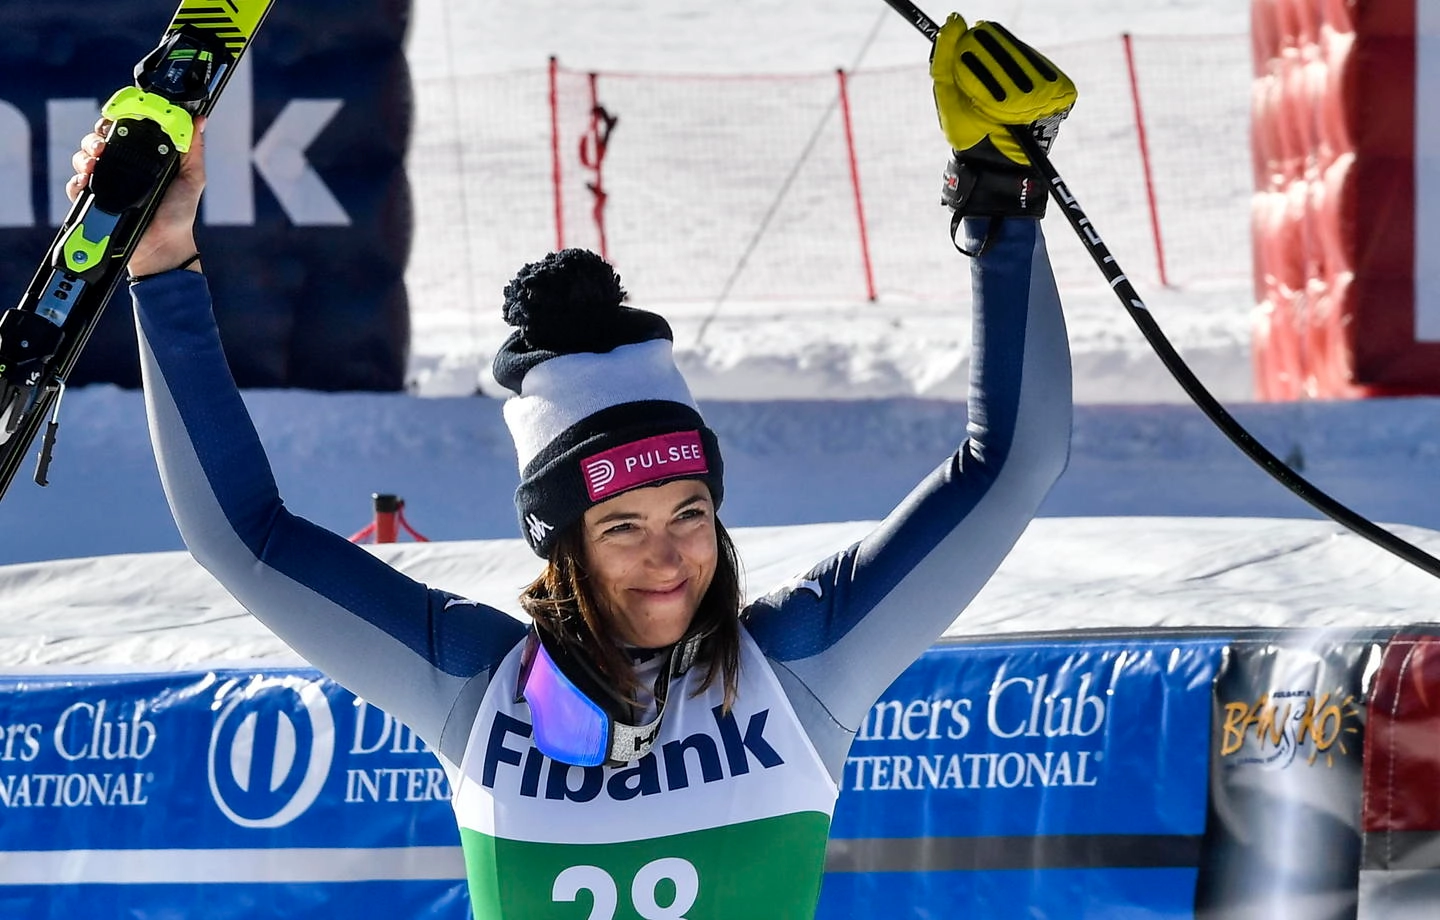 epa08162734 Winner Elena Curtoni of Italy celebrates after winning the Women's Downhill race at the FIS Alpine Skiing World Cup in Bansko, Bulgaria on 25 January 2020.  EPA/GEORGI LICOVSKI